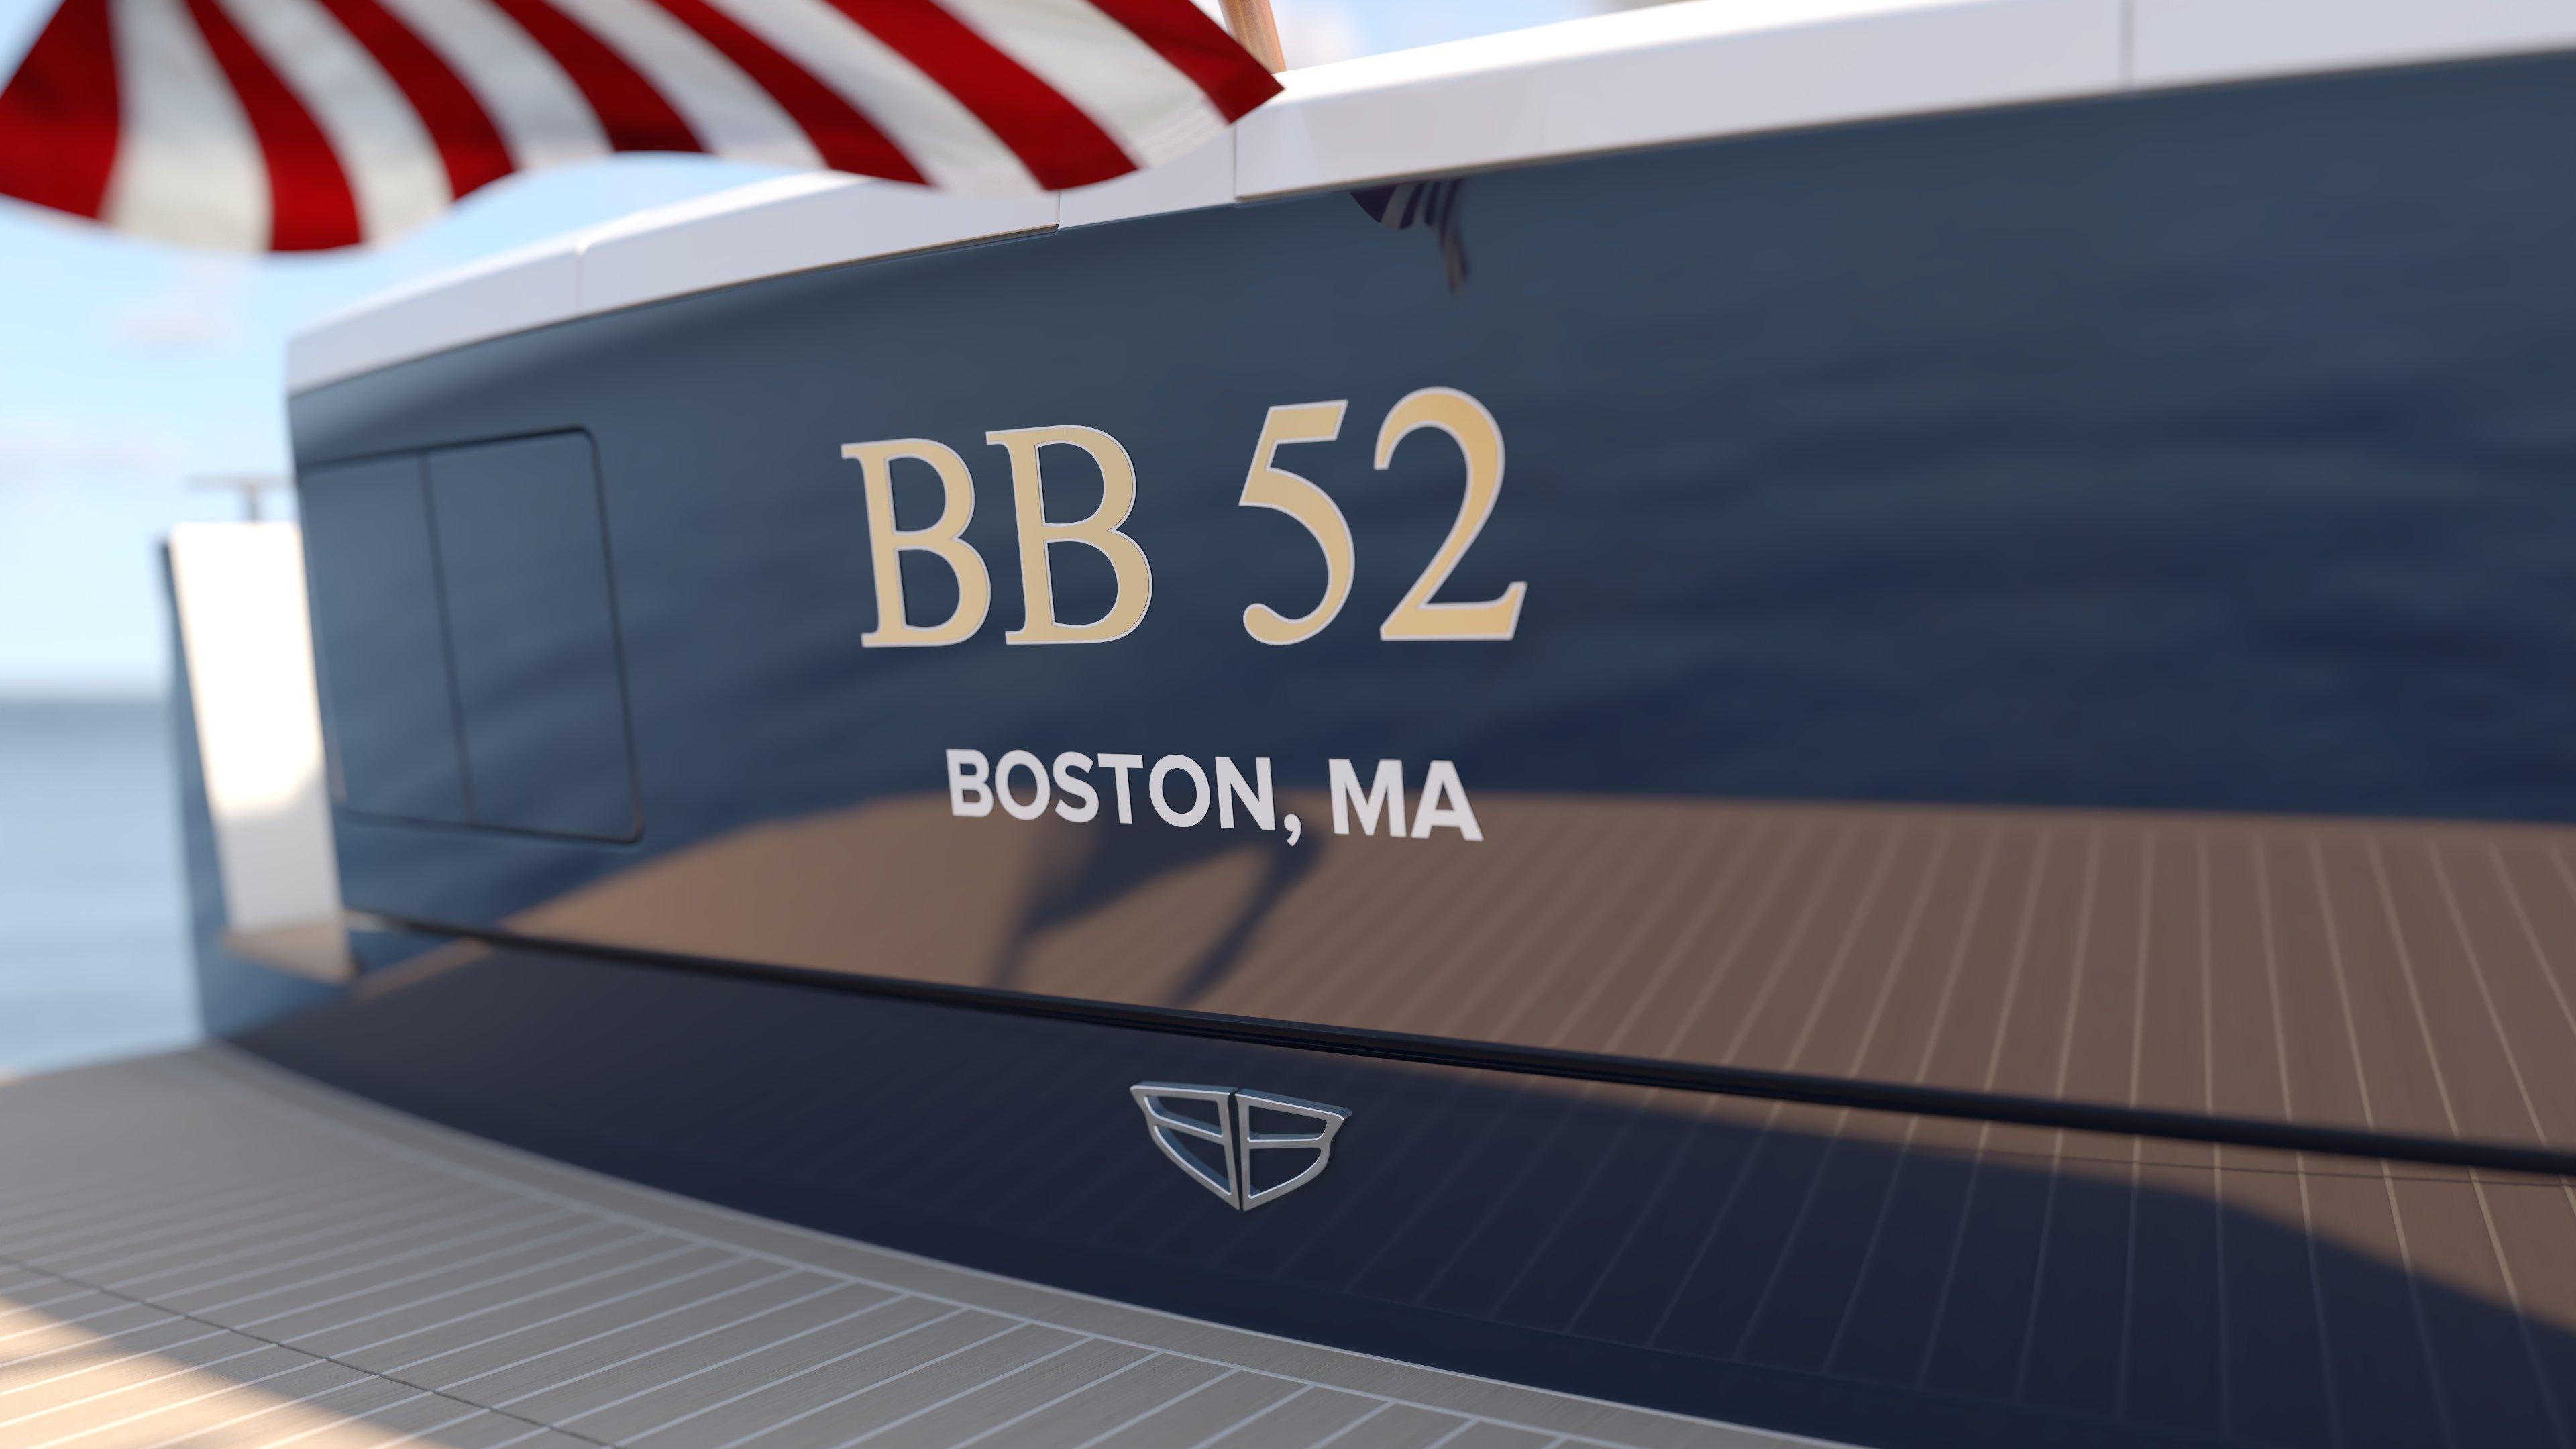 2024 Boston Boatworks BB52